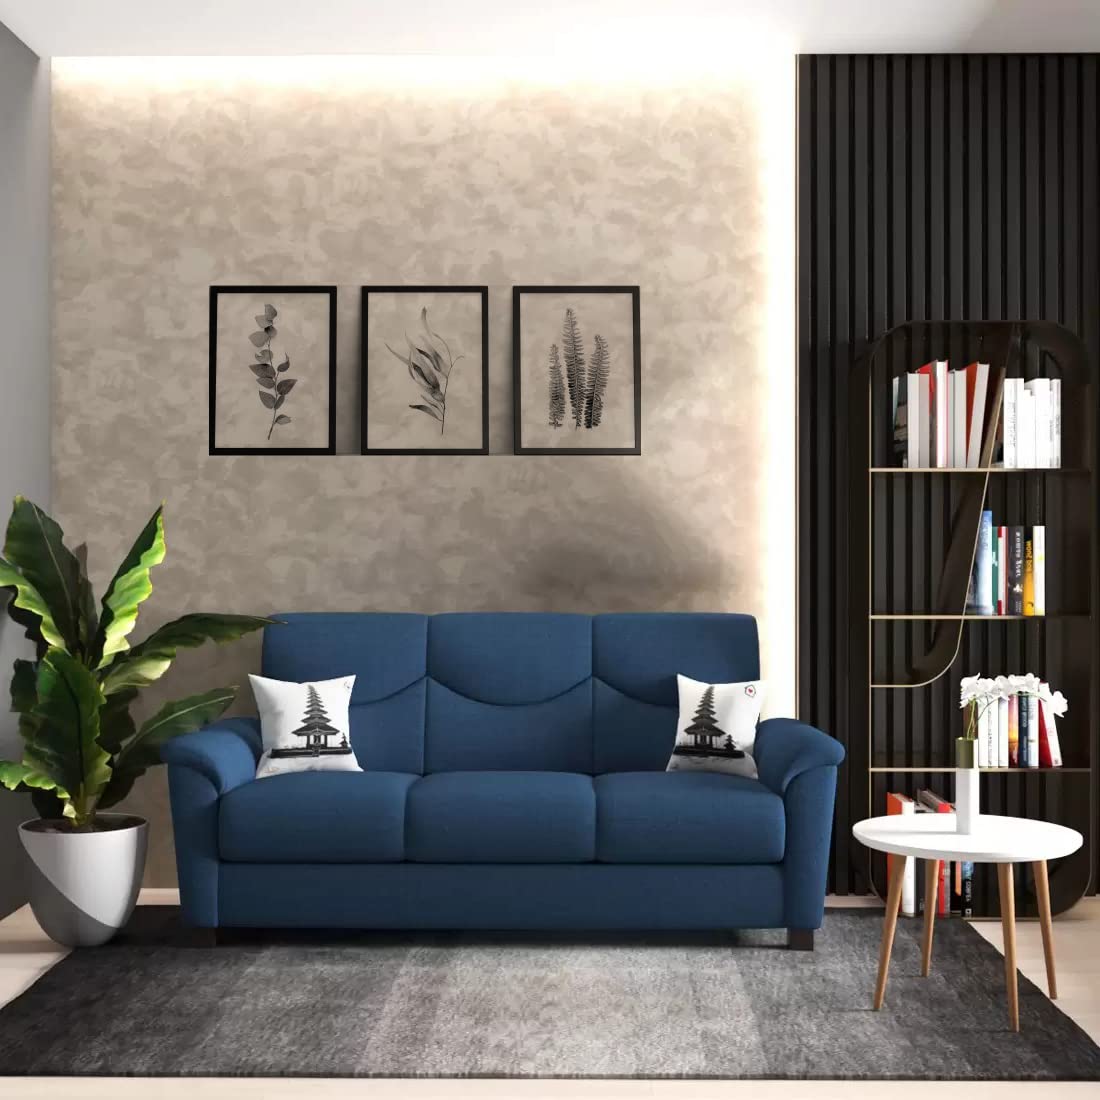 Torque India Nuevo 3 Seater Fabric Sofa | Furniture for Living Room And Office | 3 Seater Fabric Sofa - Torque India